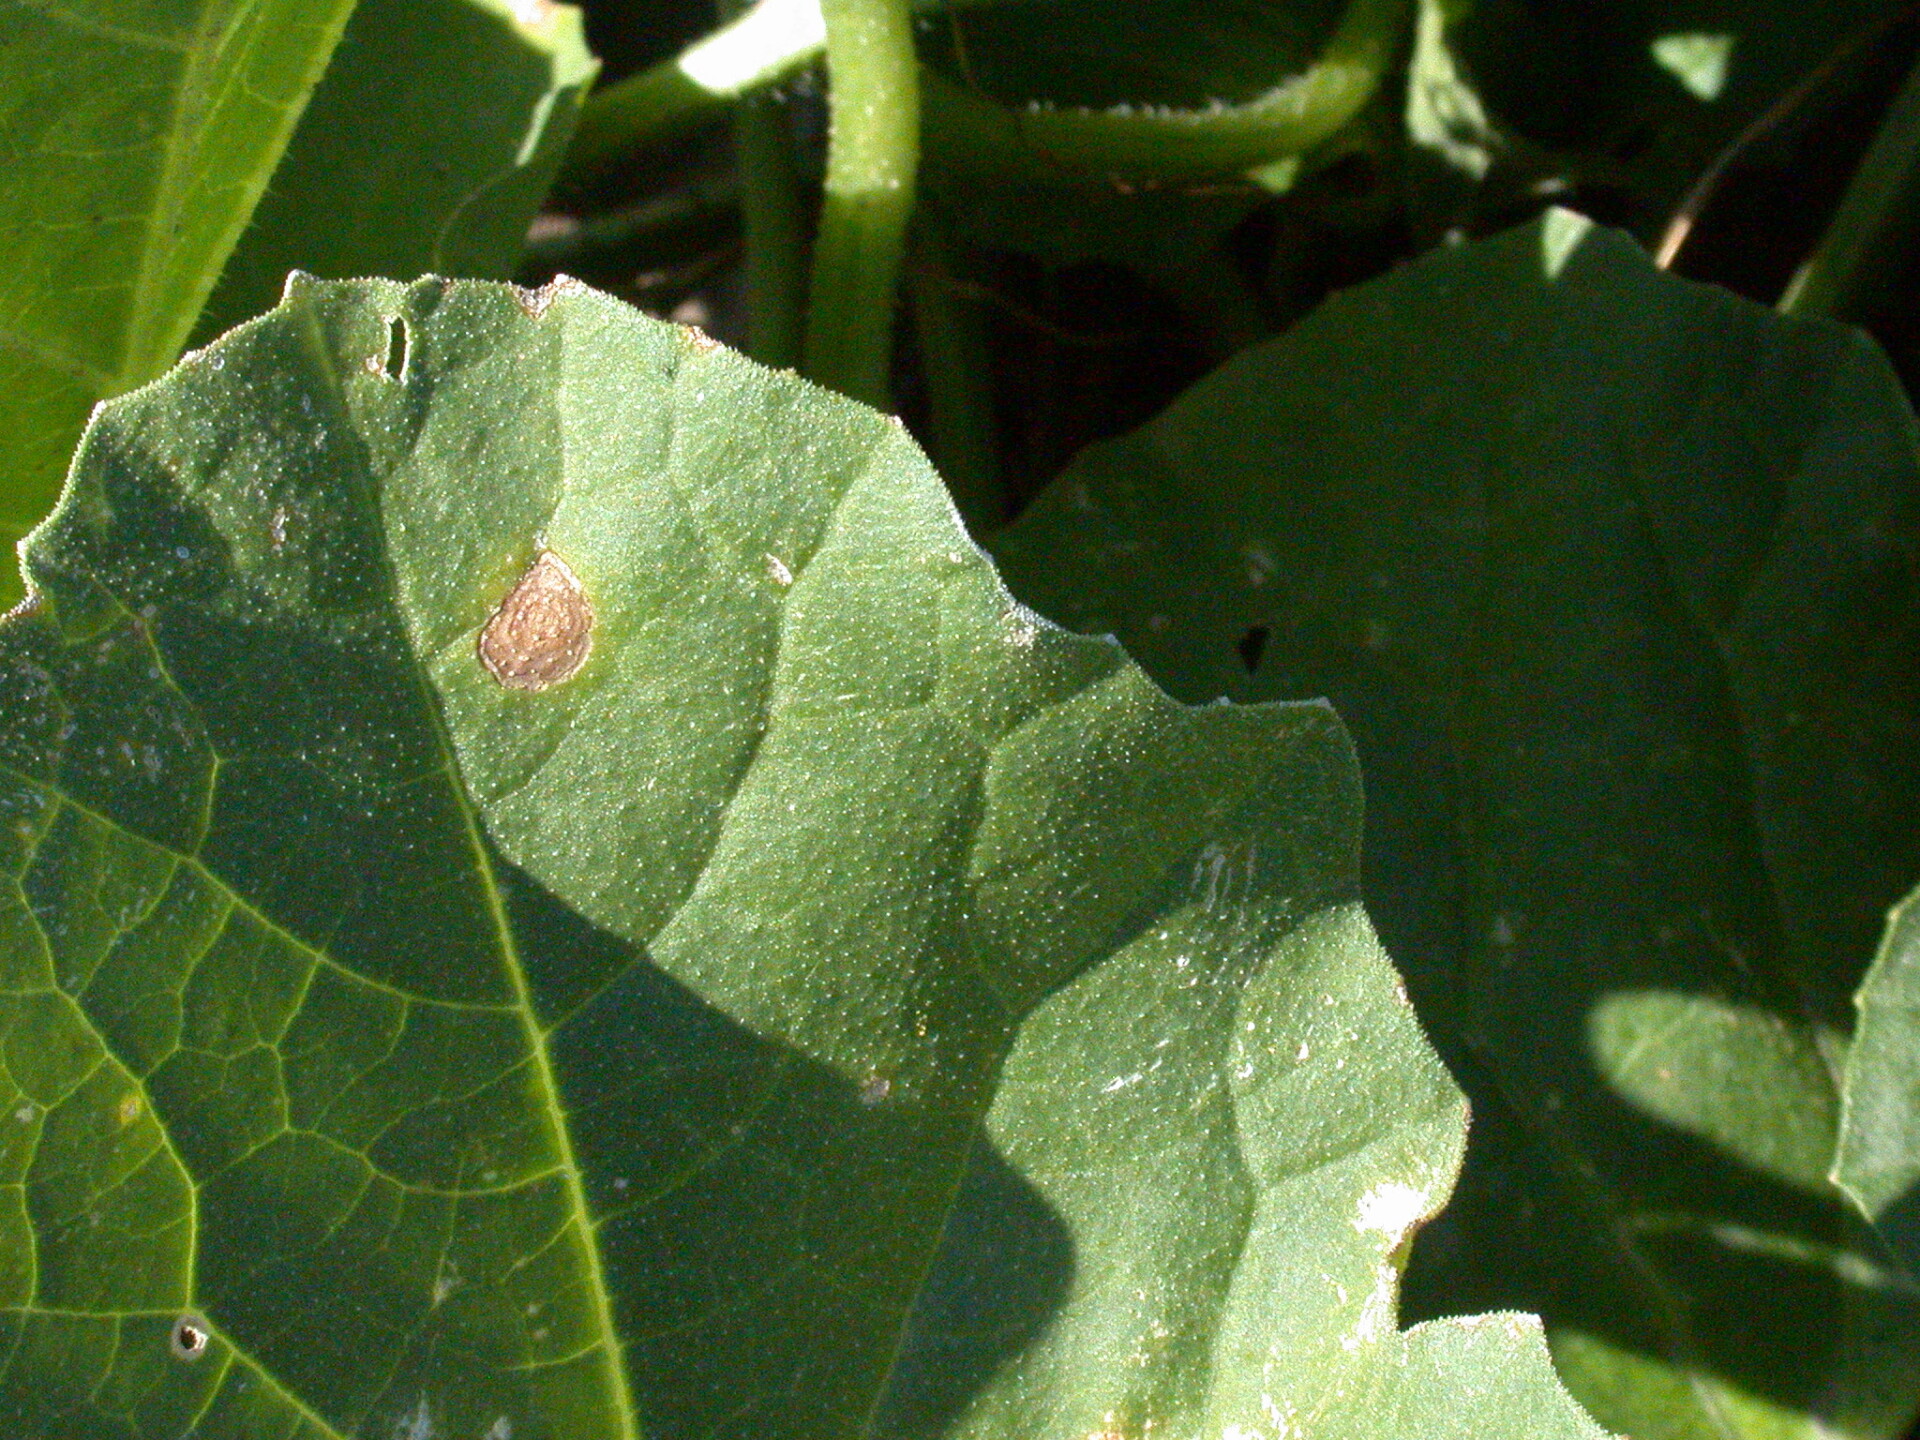 Alternaria Leaf Blight disease 